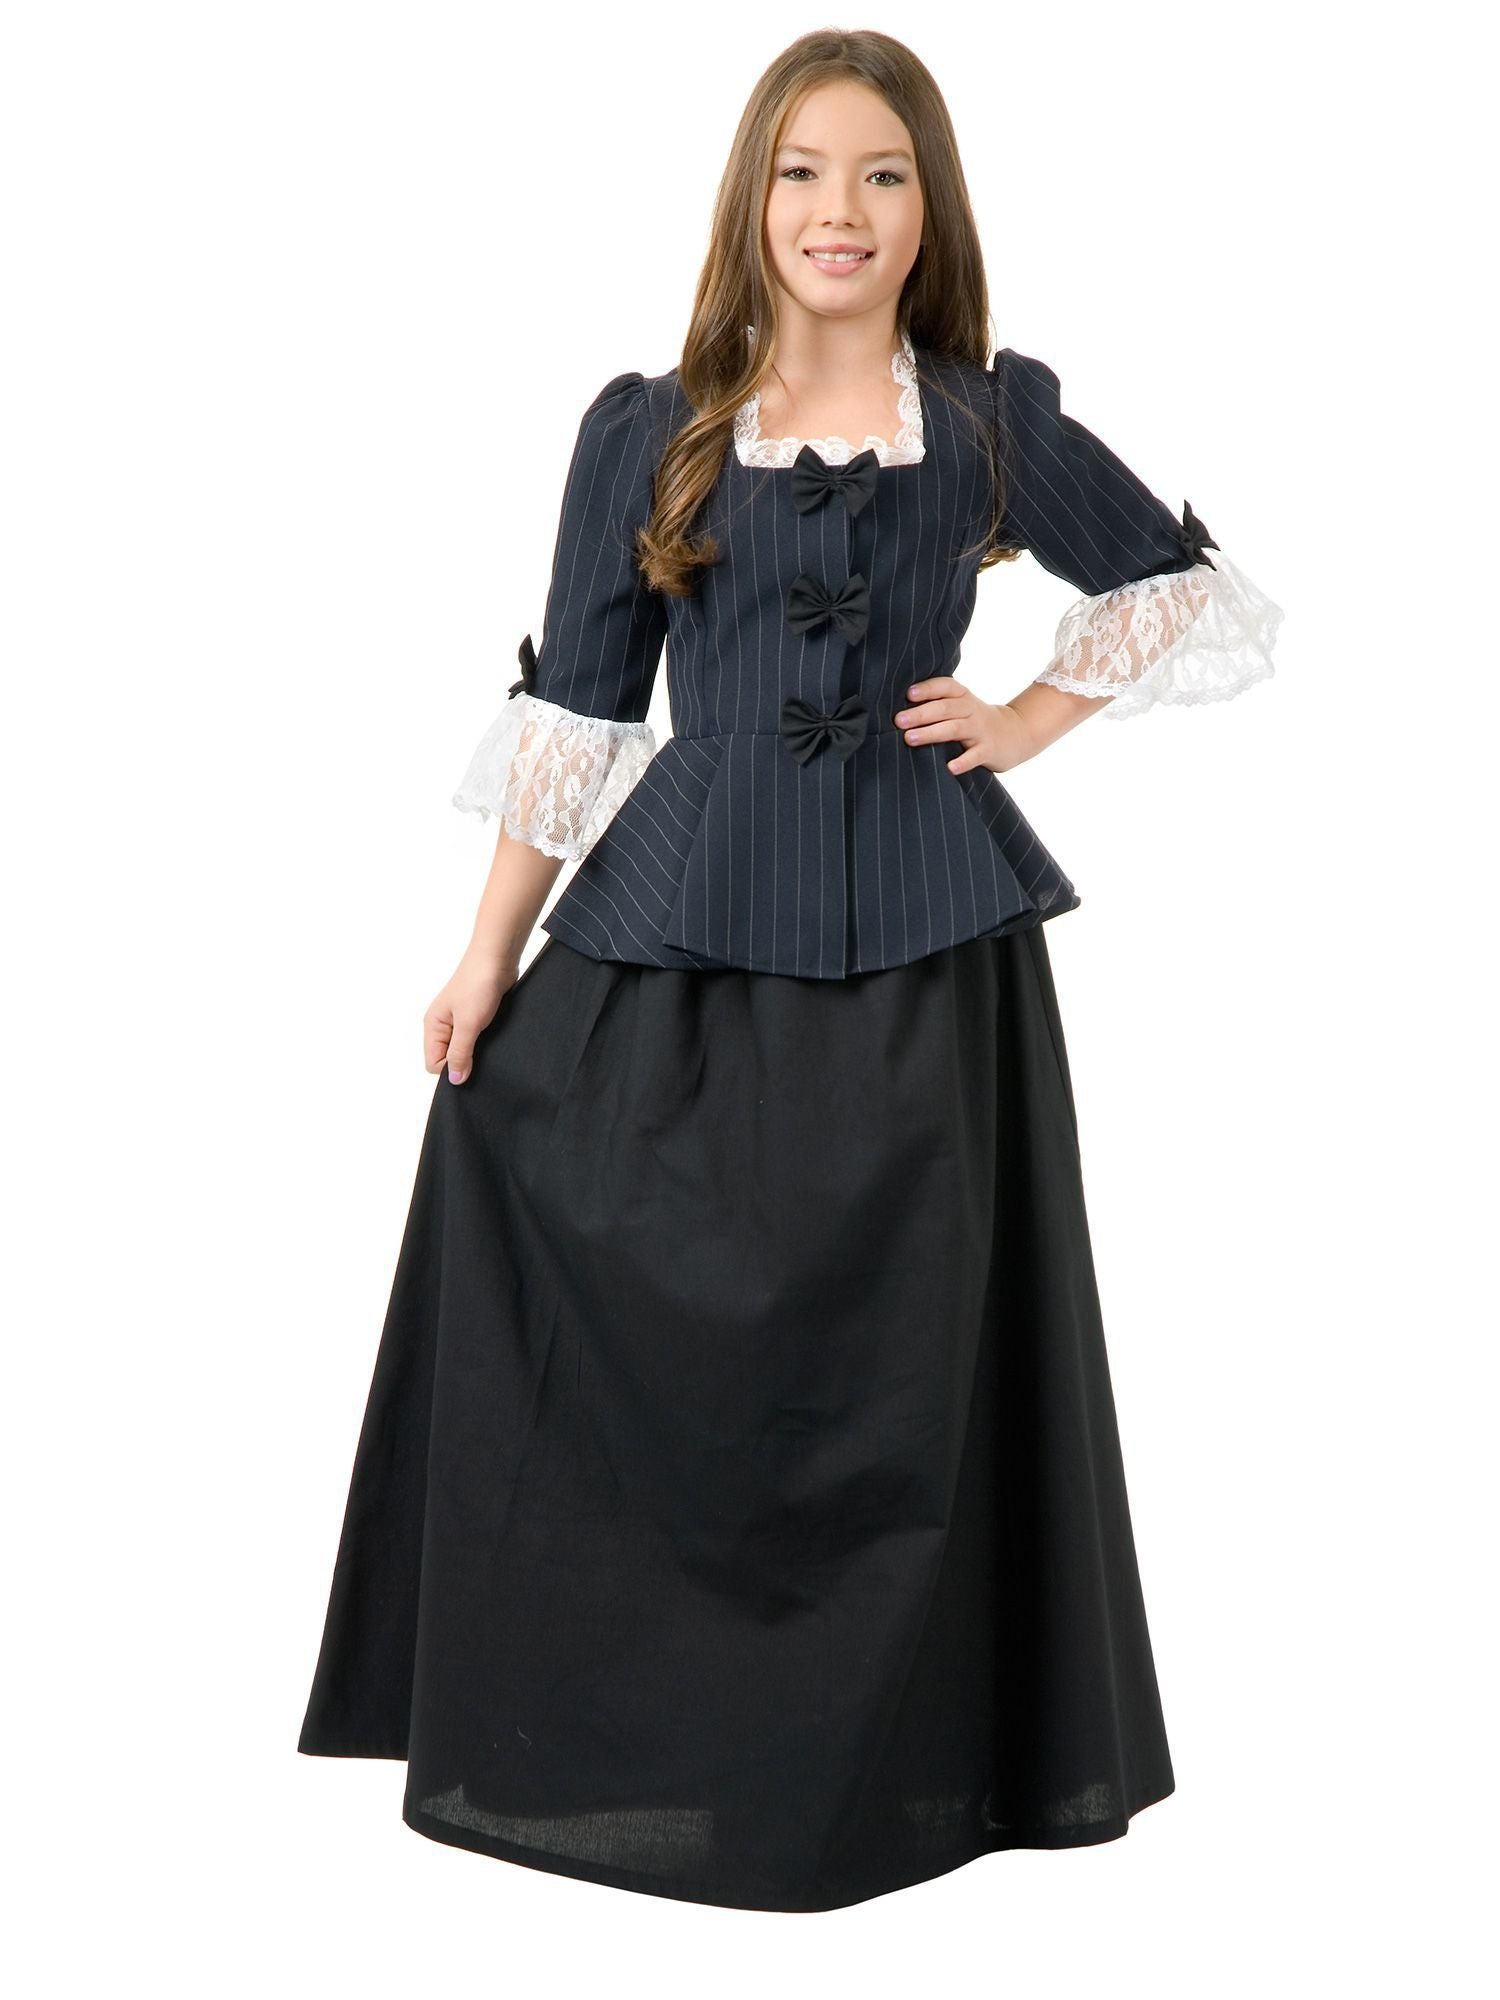 Girls' Colonial Martha Washington Costume - costumes.com